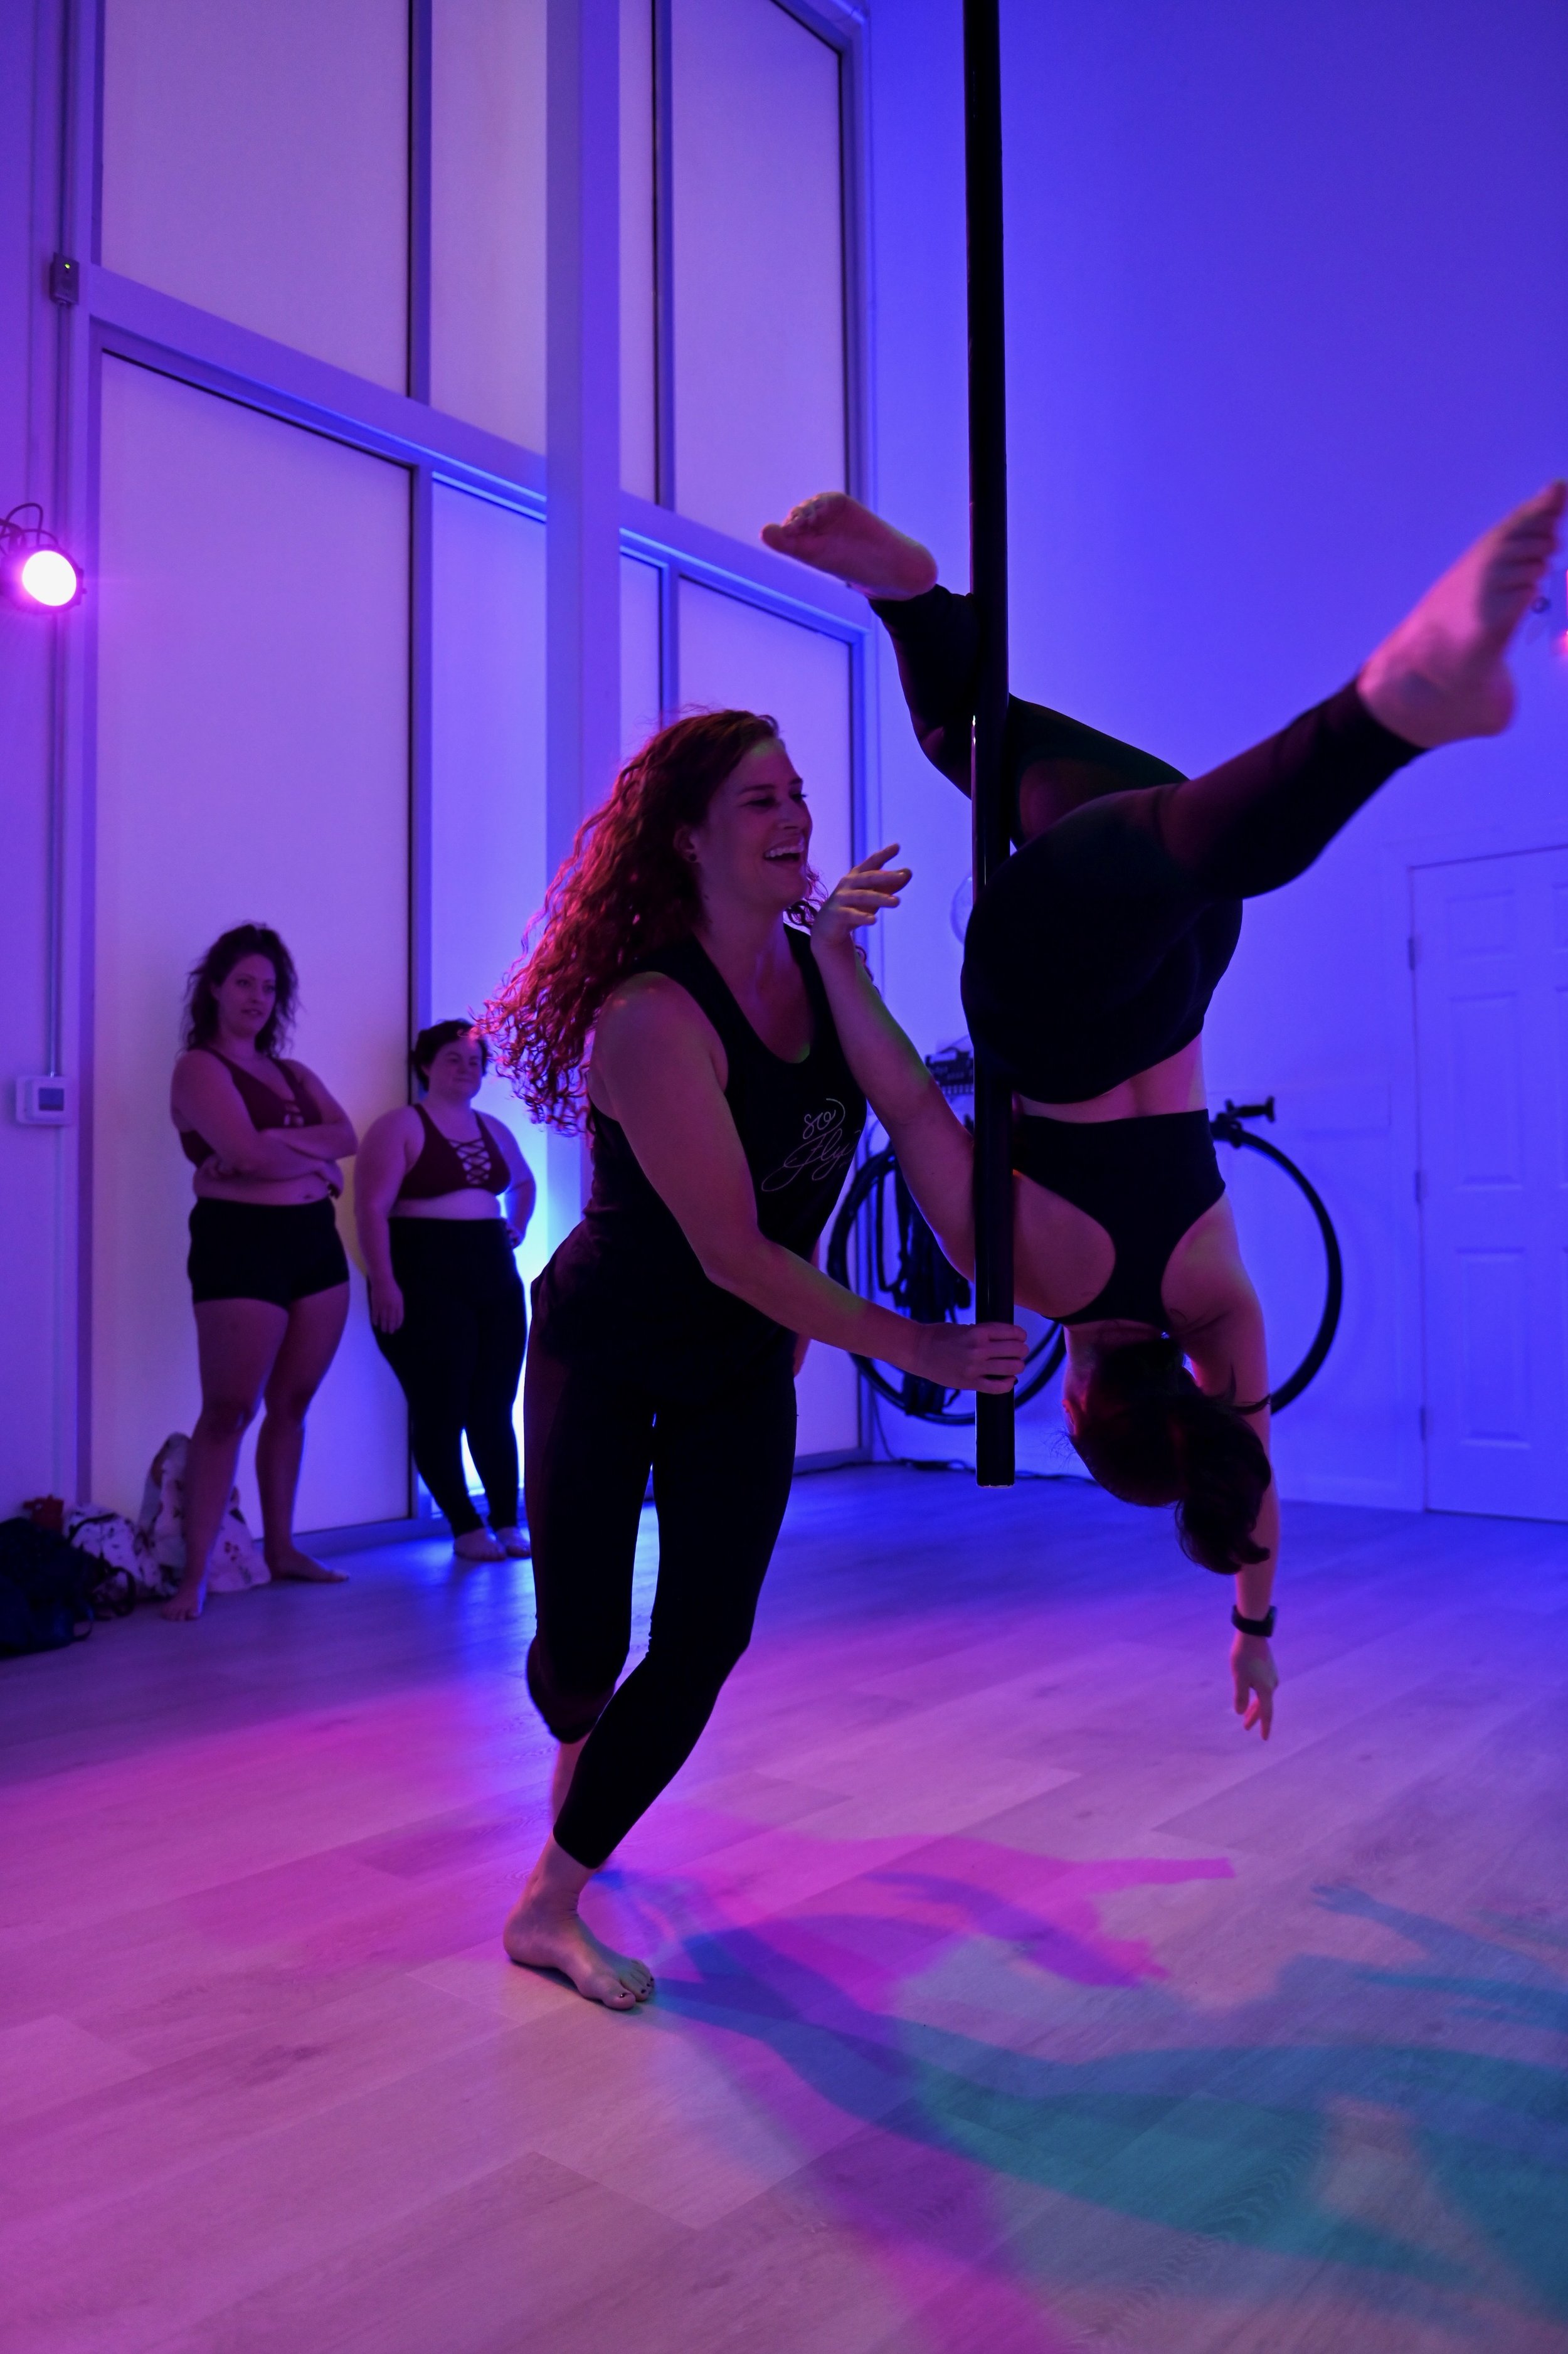 soFly Social - Austin's Largest Pole Dance & Aerial Arts Studio